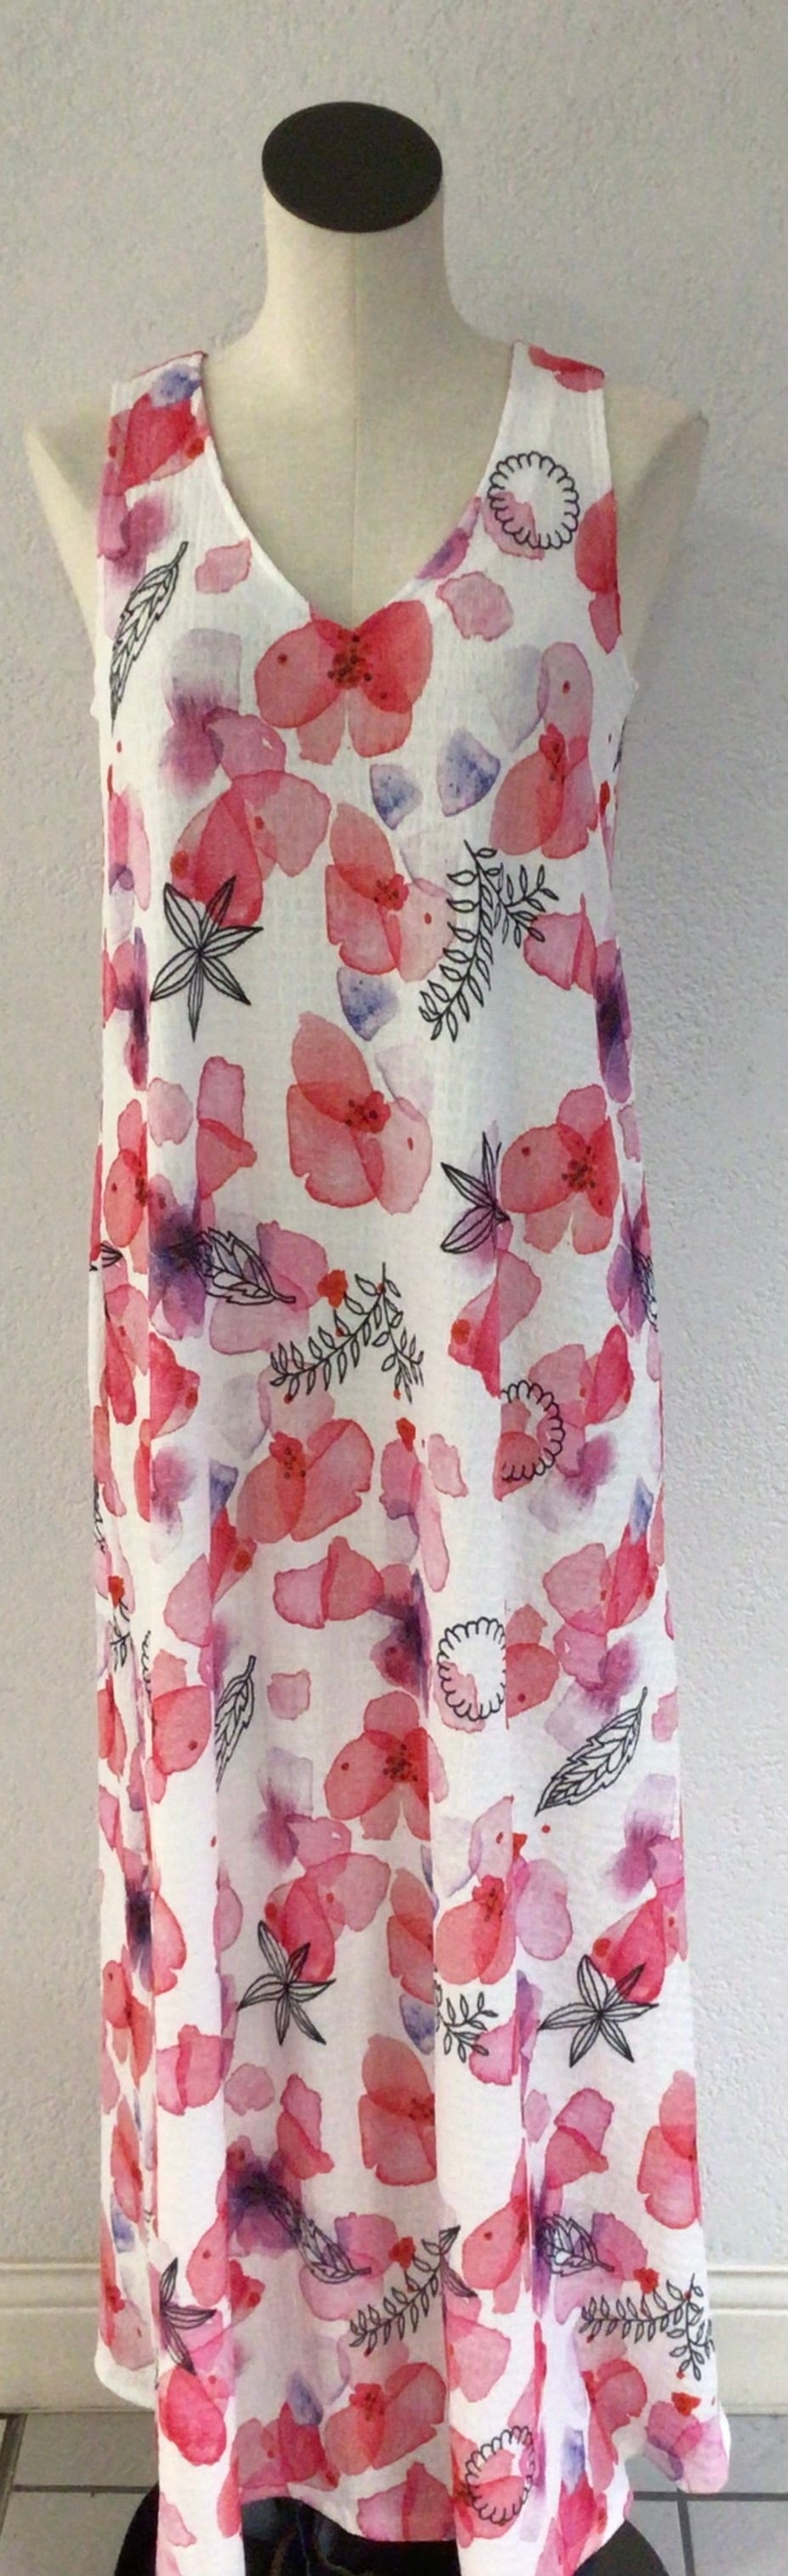 Compli K Floral Print Dress 33565